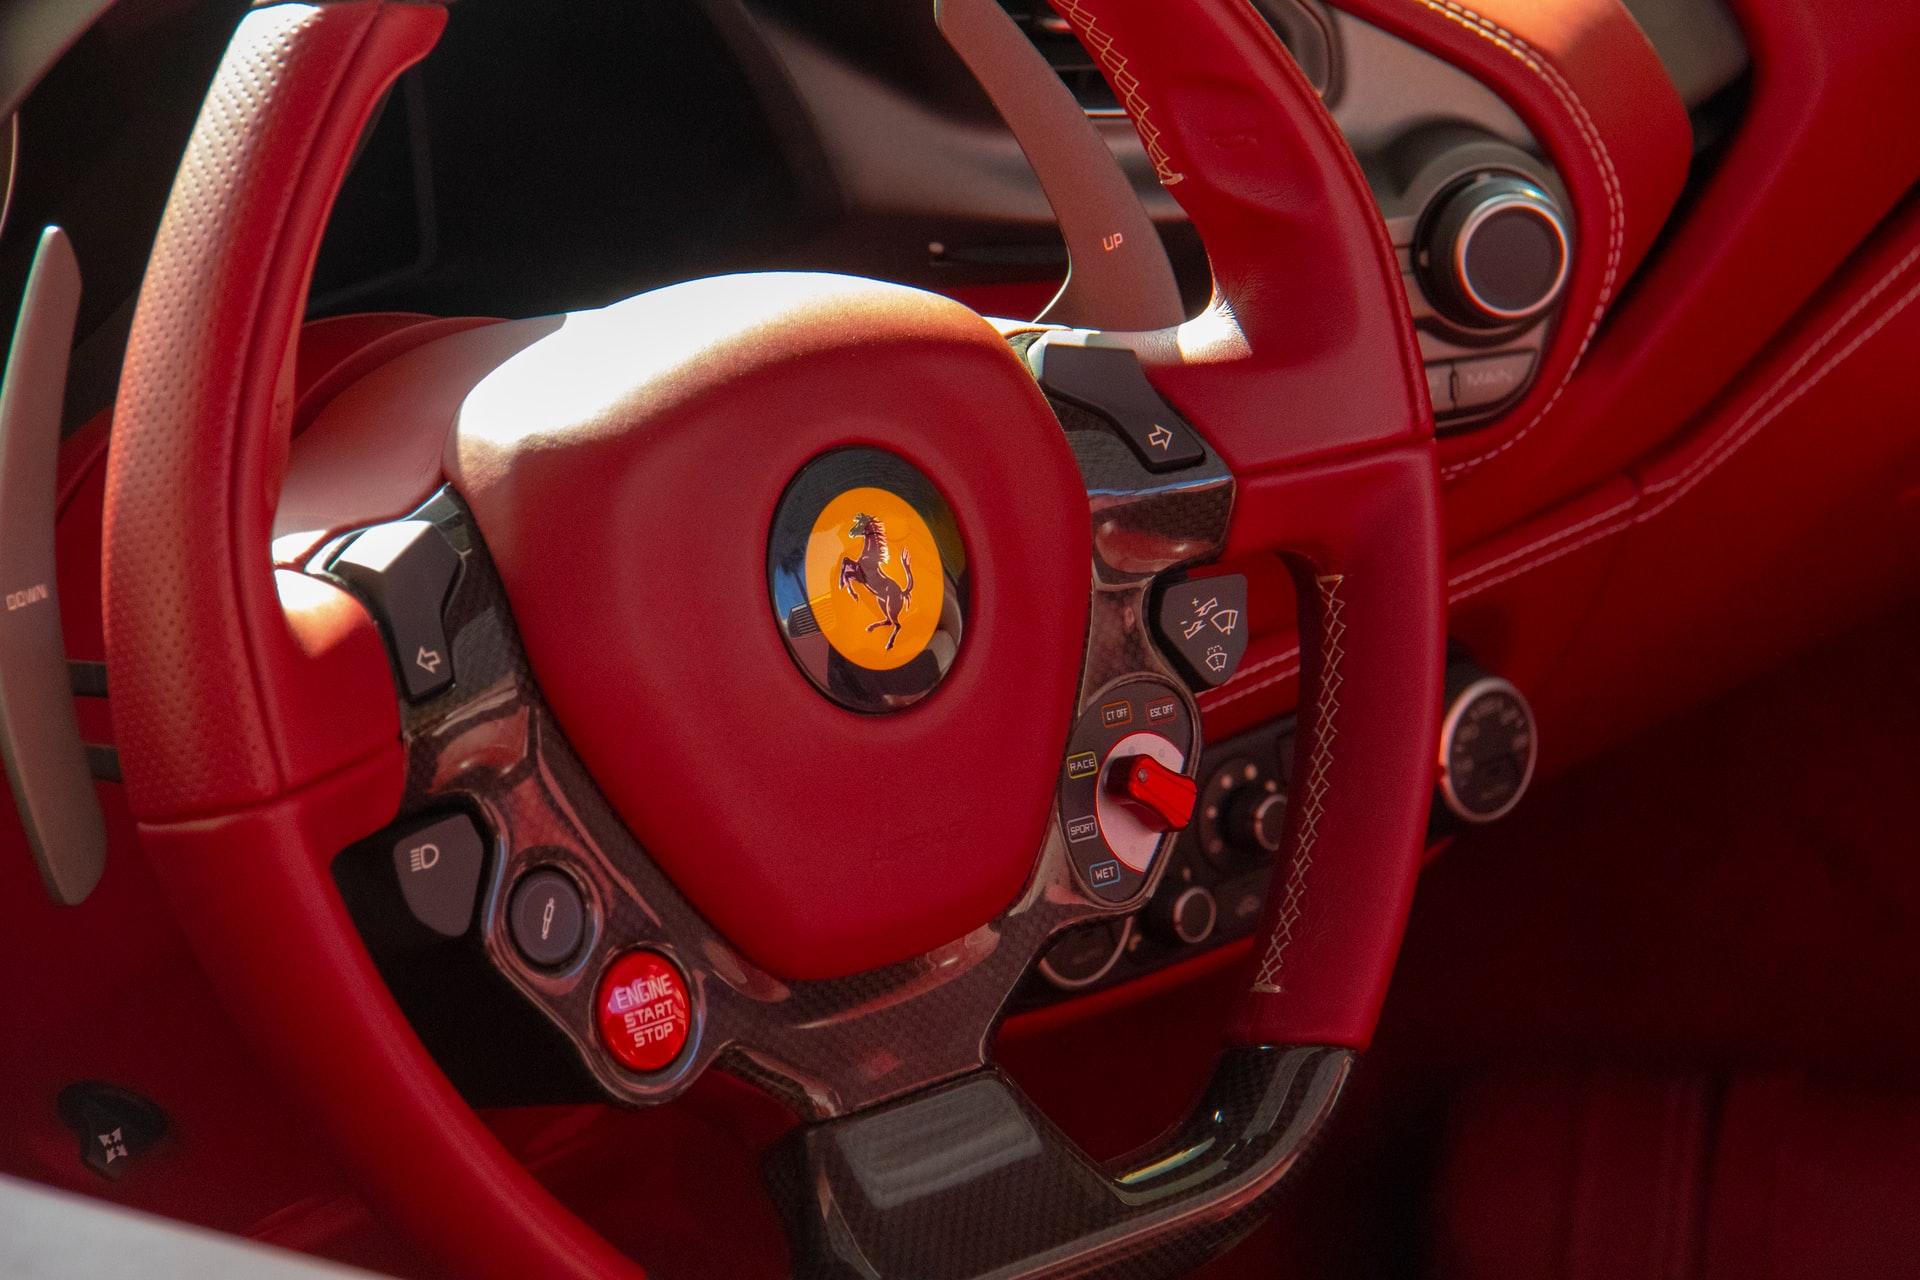 The rare Ferrari 250 Testa Rossa will be available in miniature form.